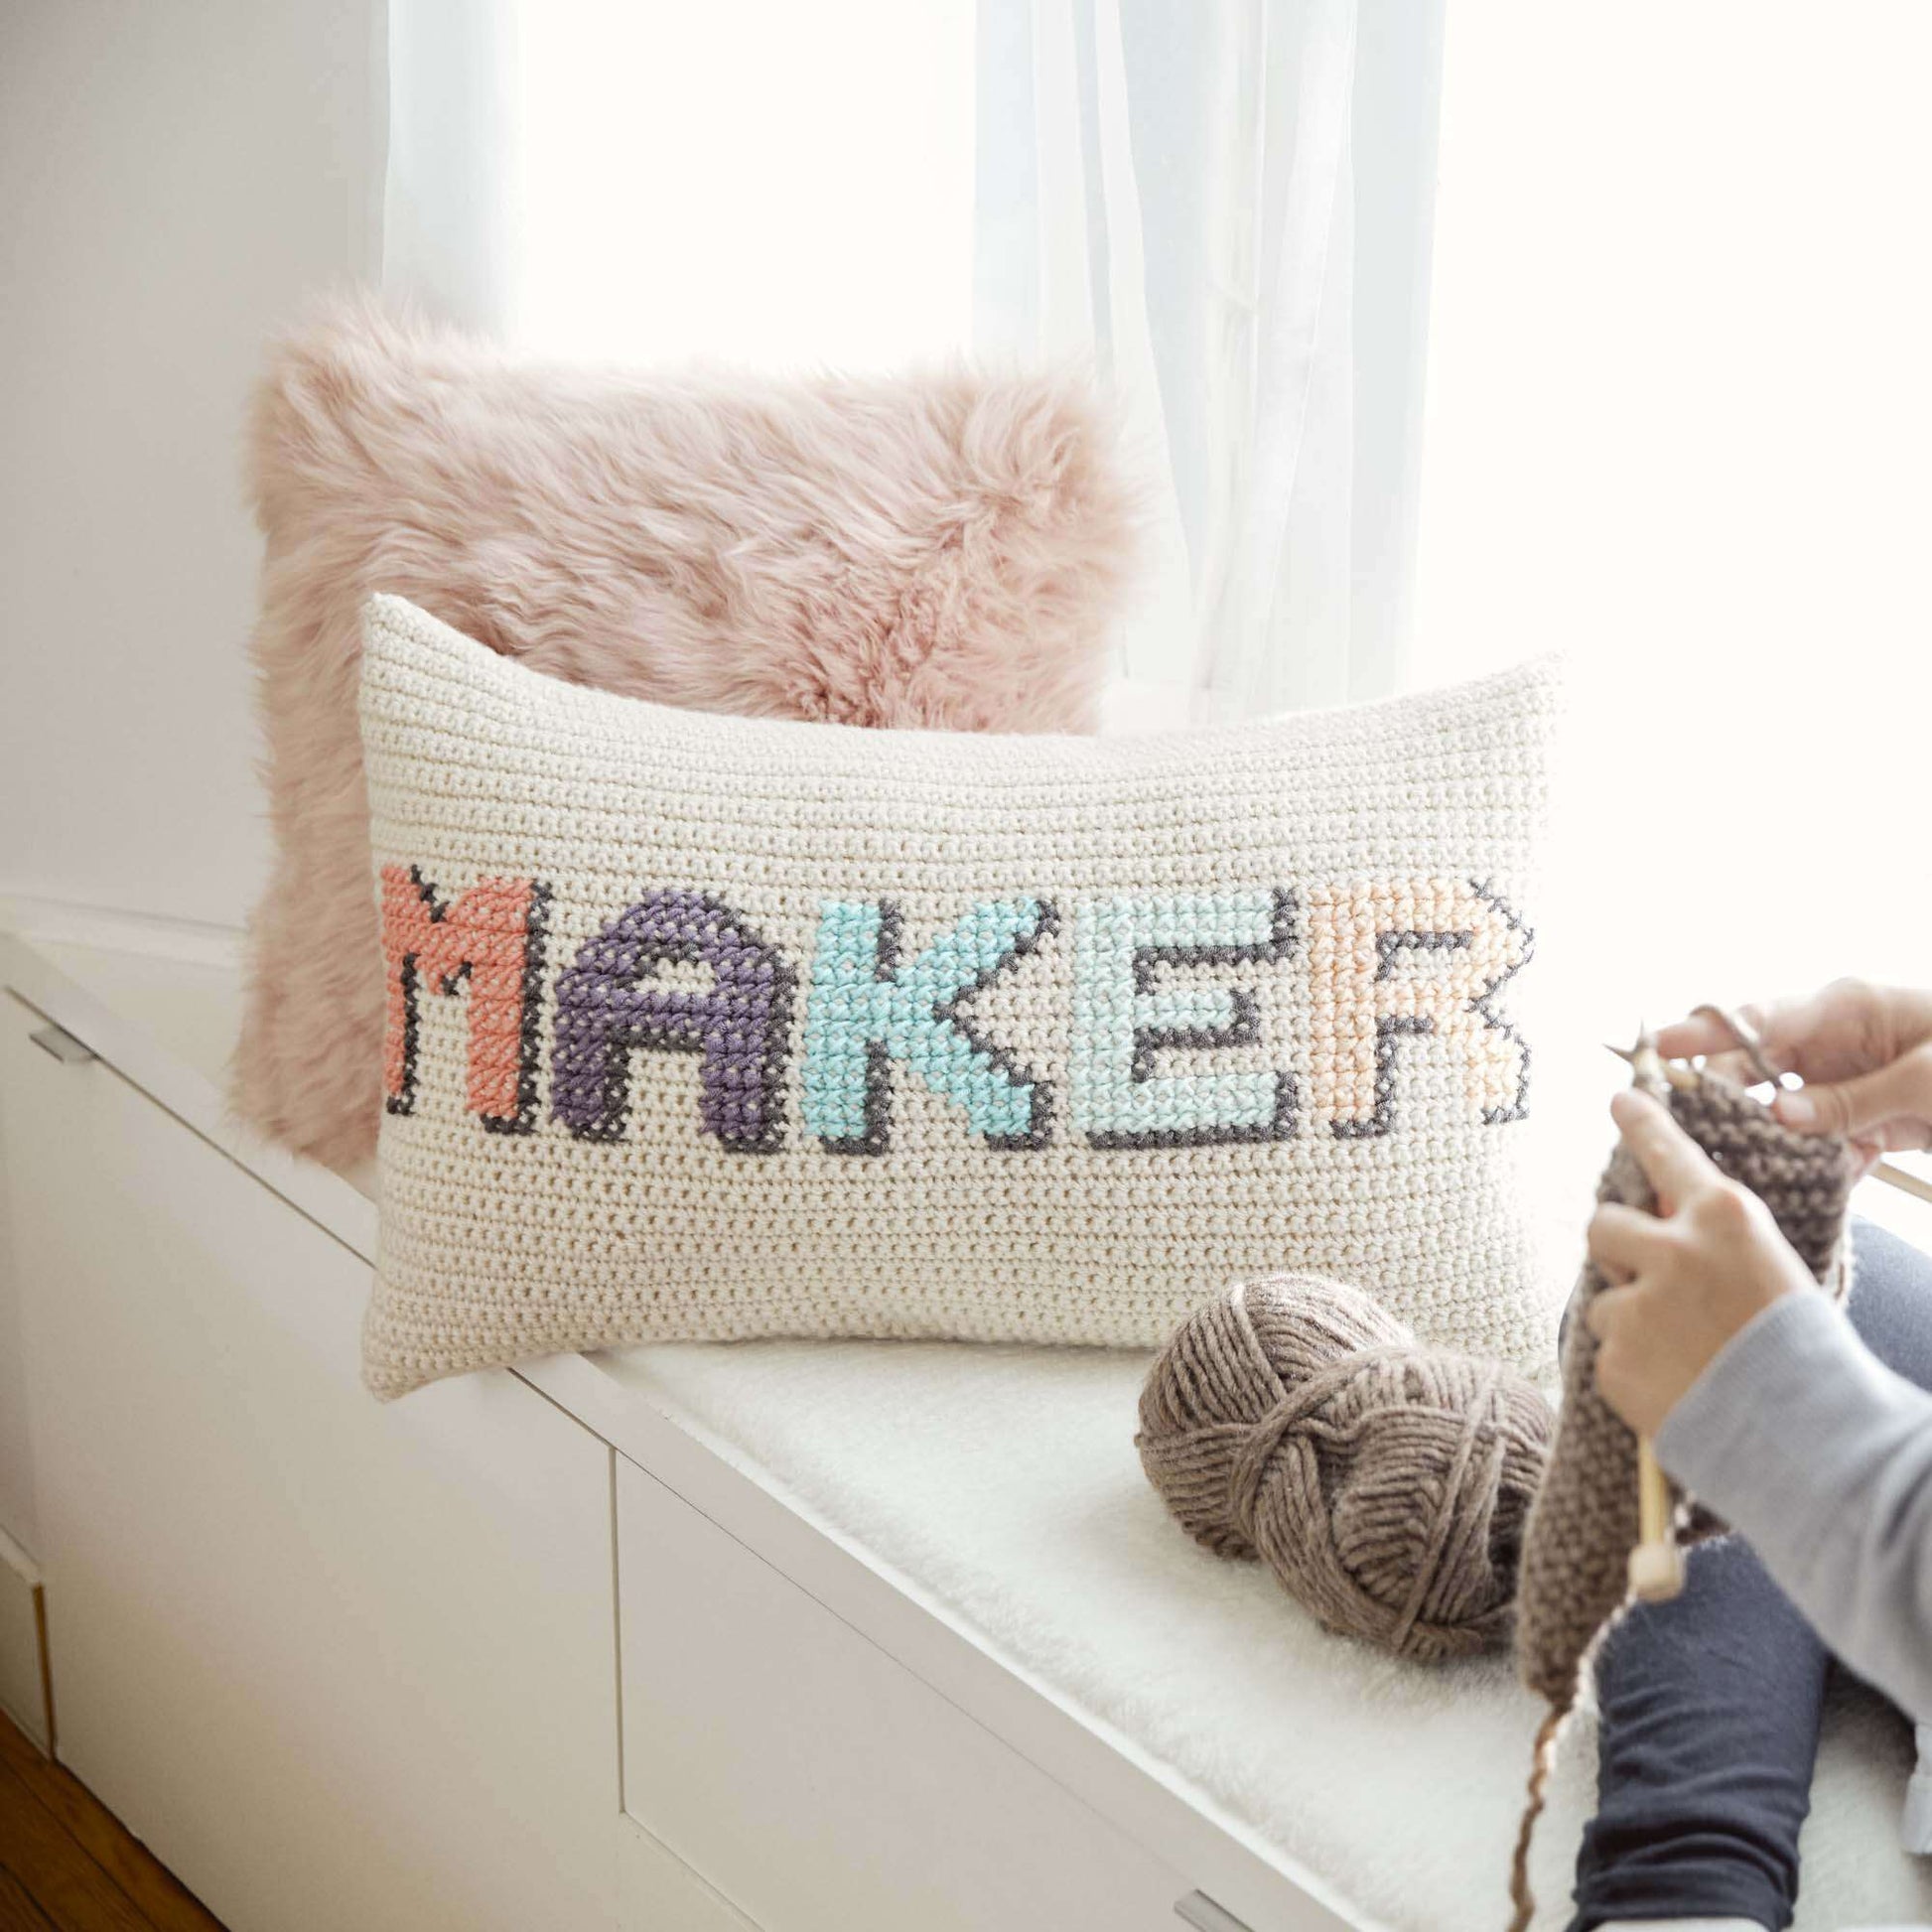 Free Caron Crochet & Cross Stitch "Maker" Pillow Pattern